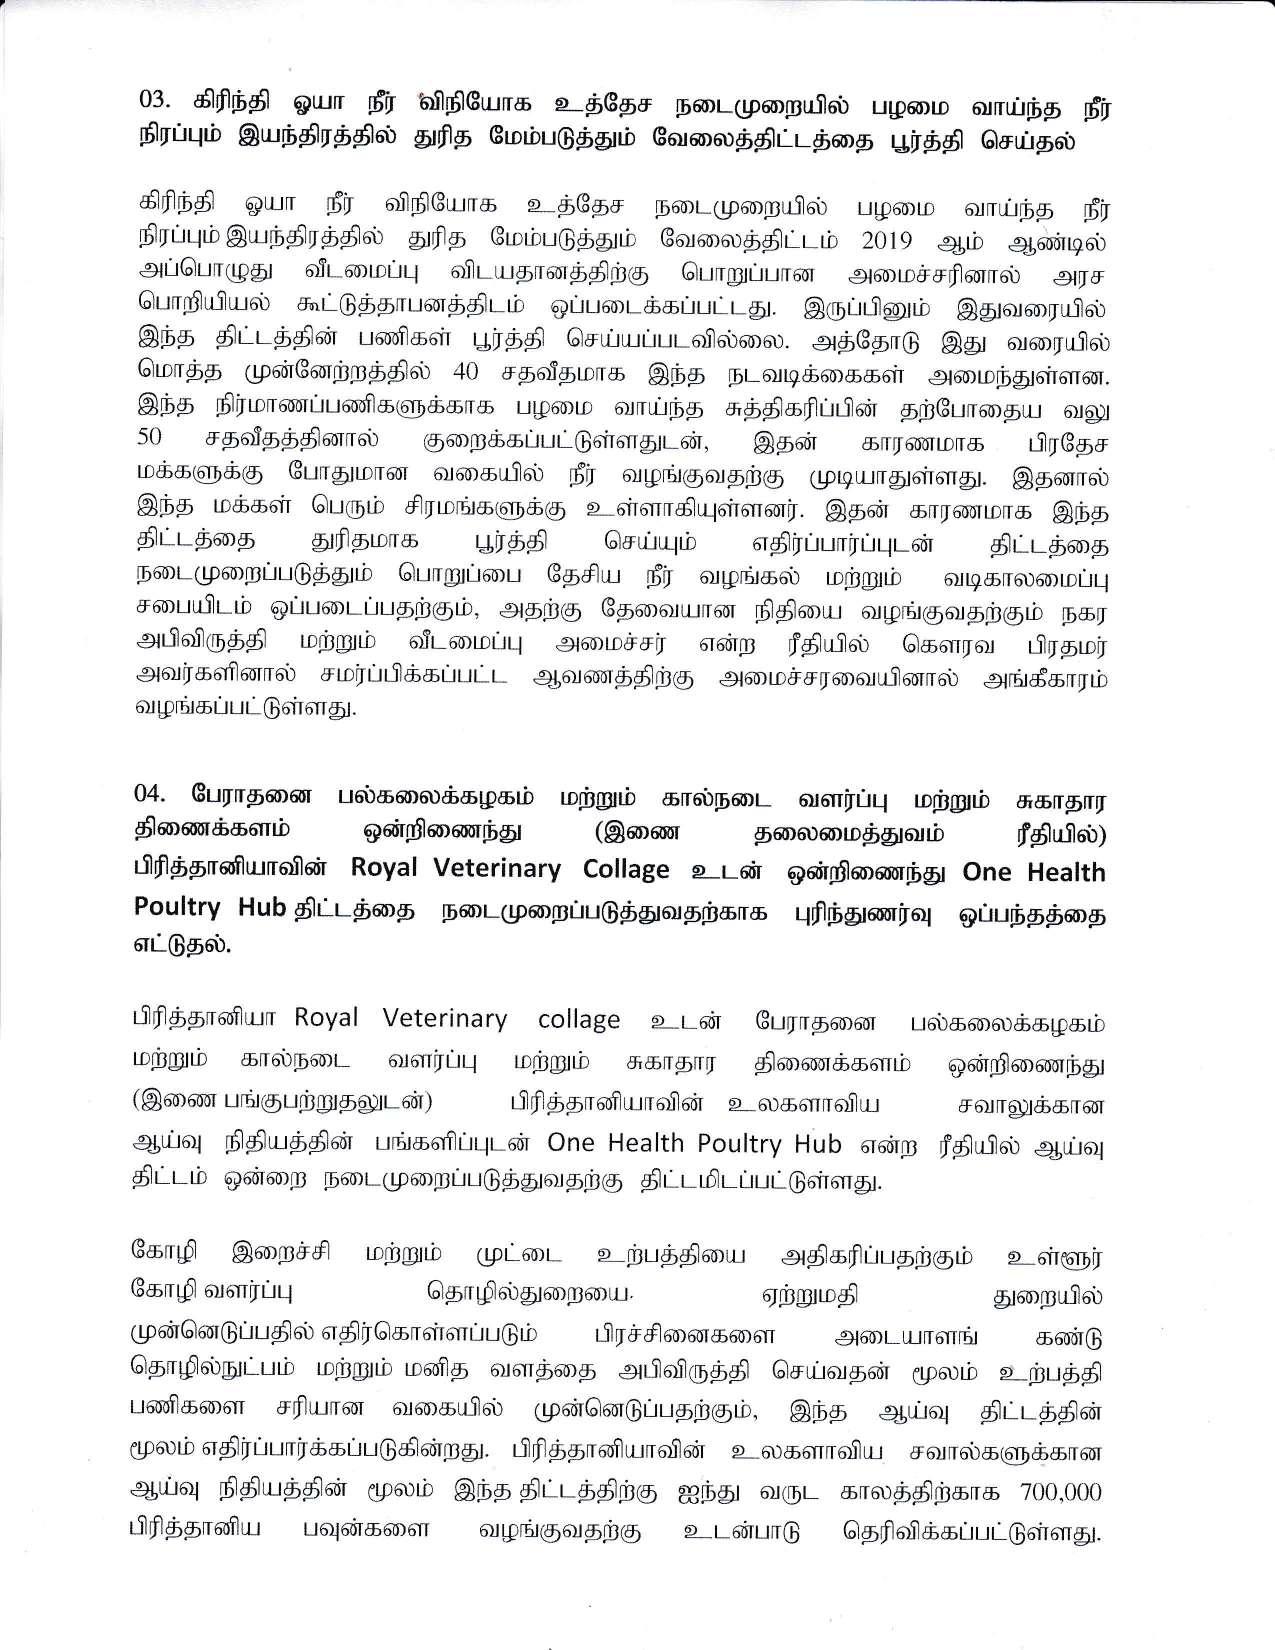 cabinet Desicion on 28.09.2020 Tamil 1 page 003